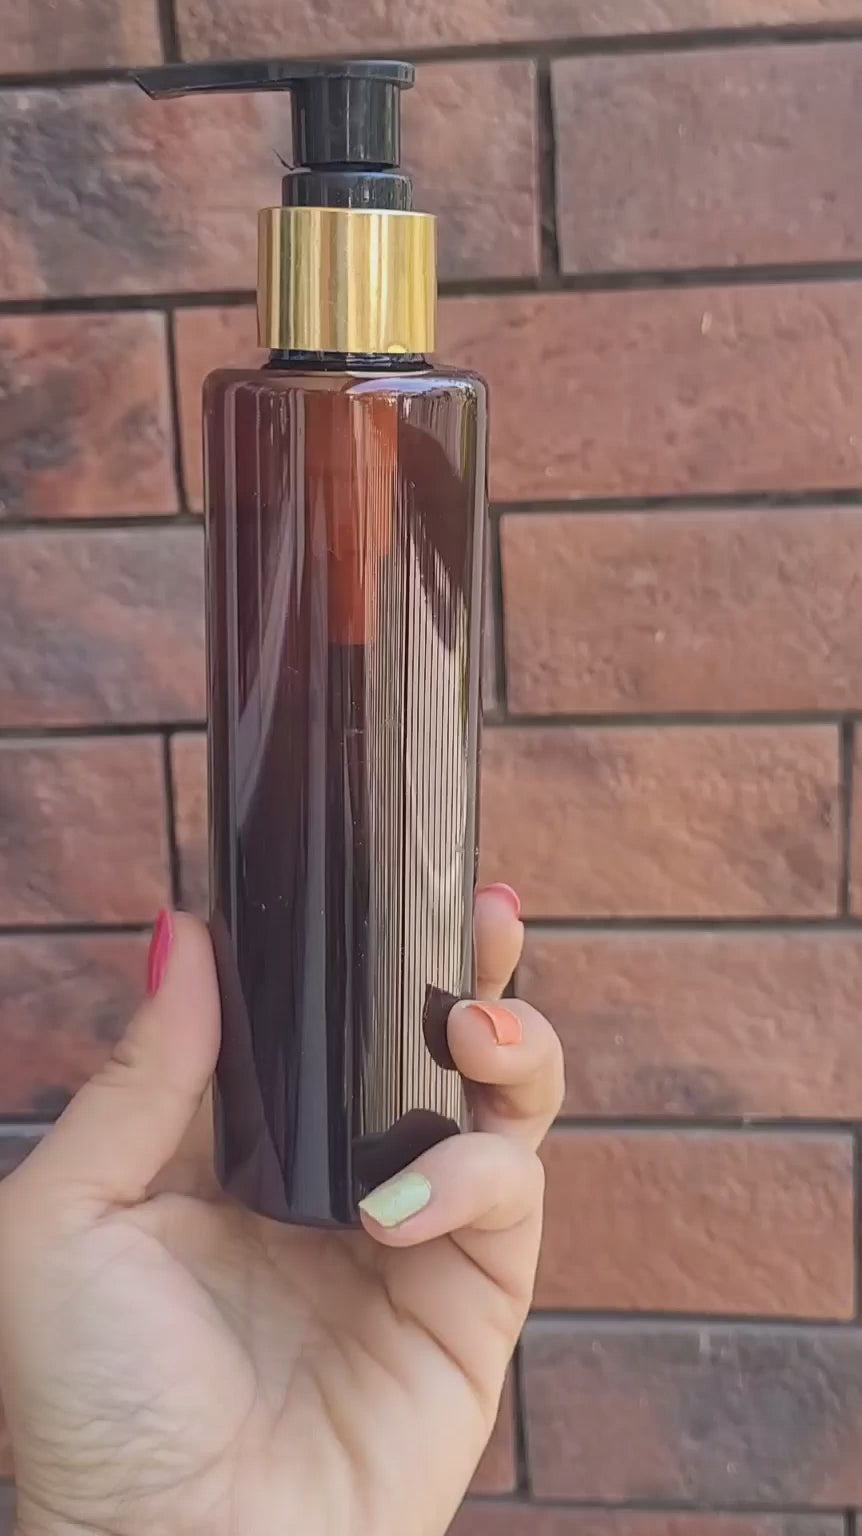 Amber Color Premium Empty Bottles with Metalized Golden Black Dispenser Pump  200 ML [ZMA19]